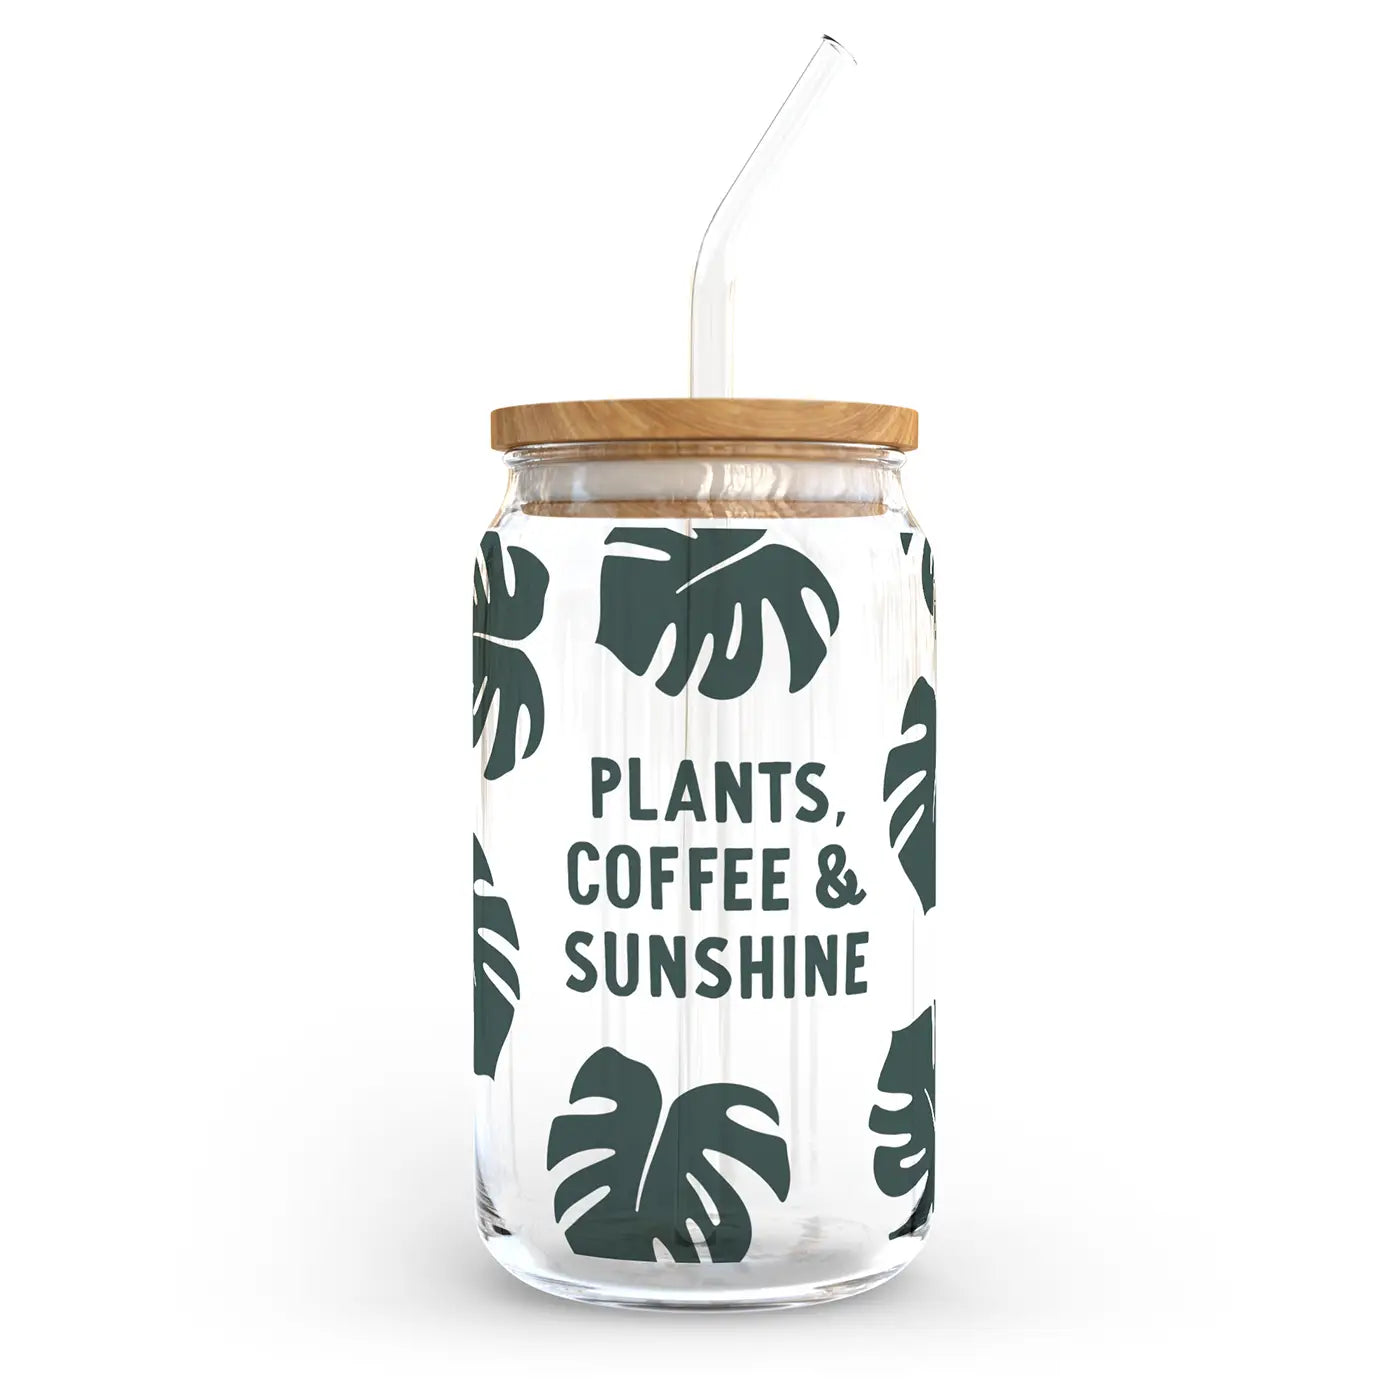 Plants Coffee & Sunshine glass cup with straw